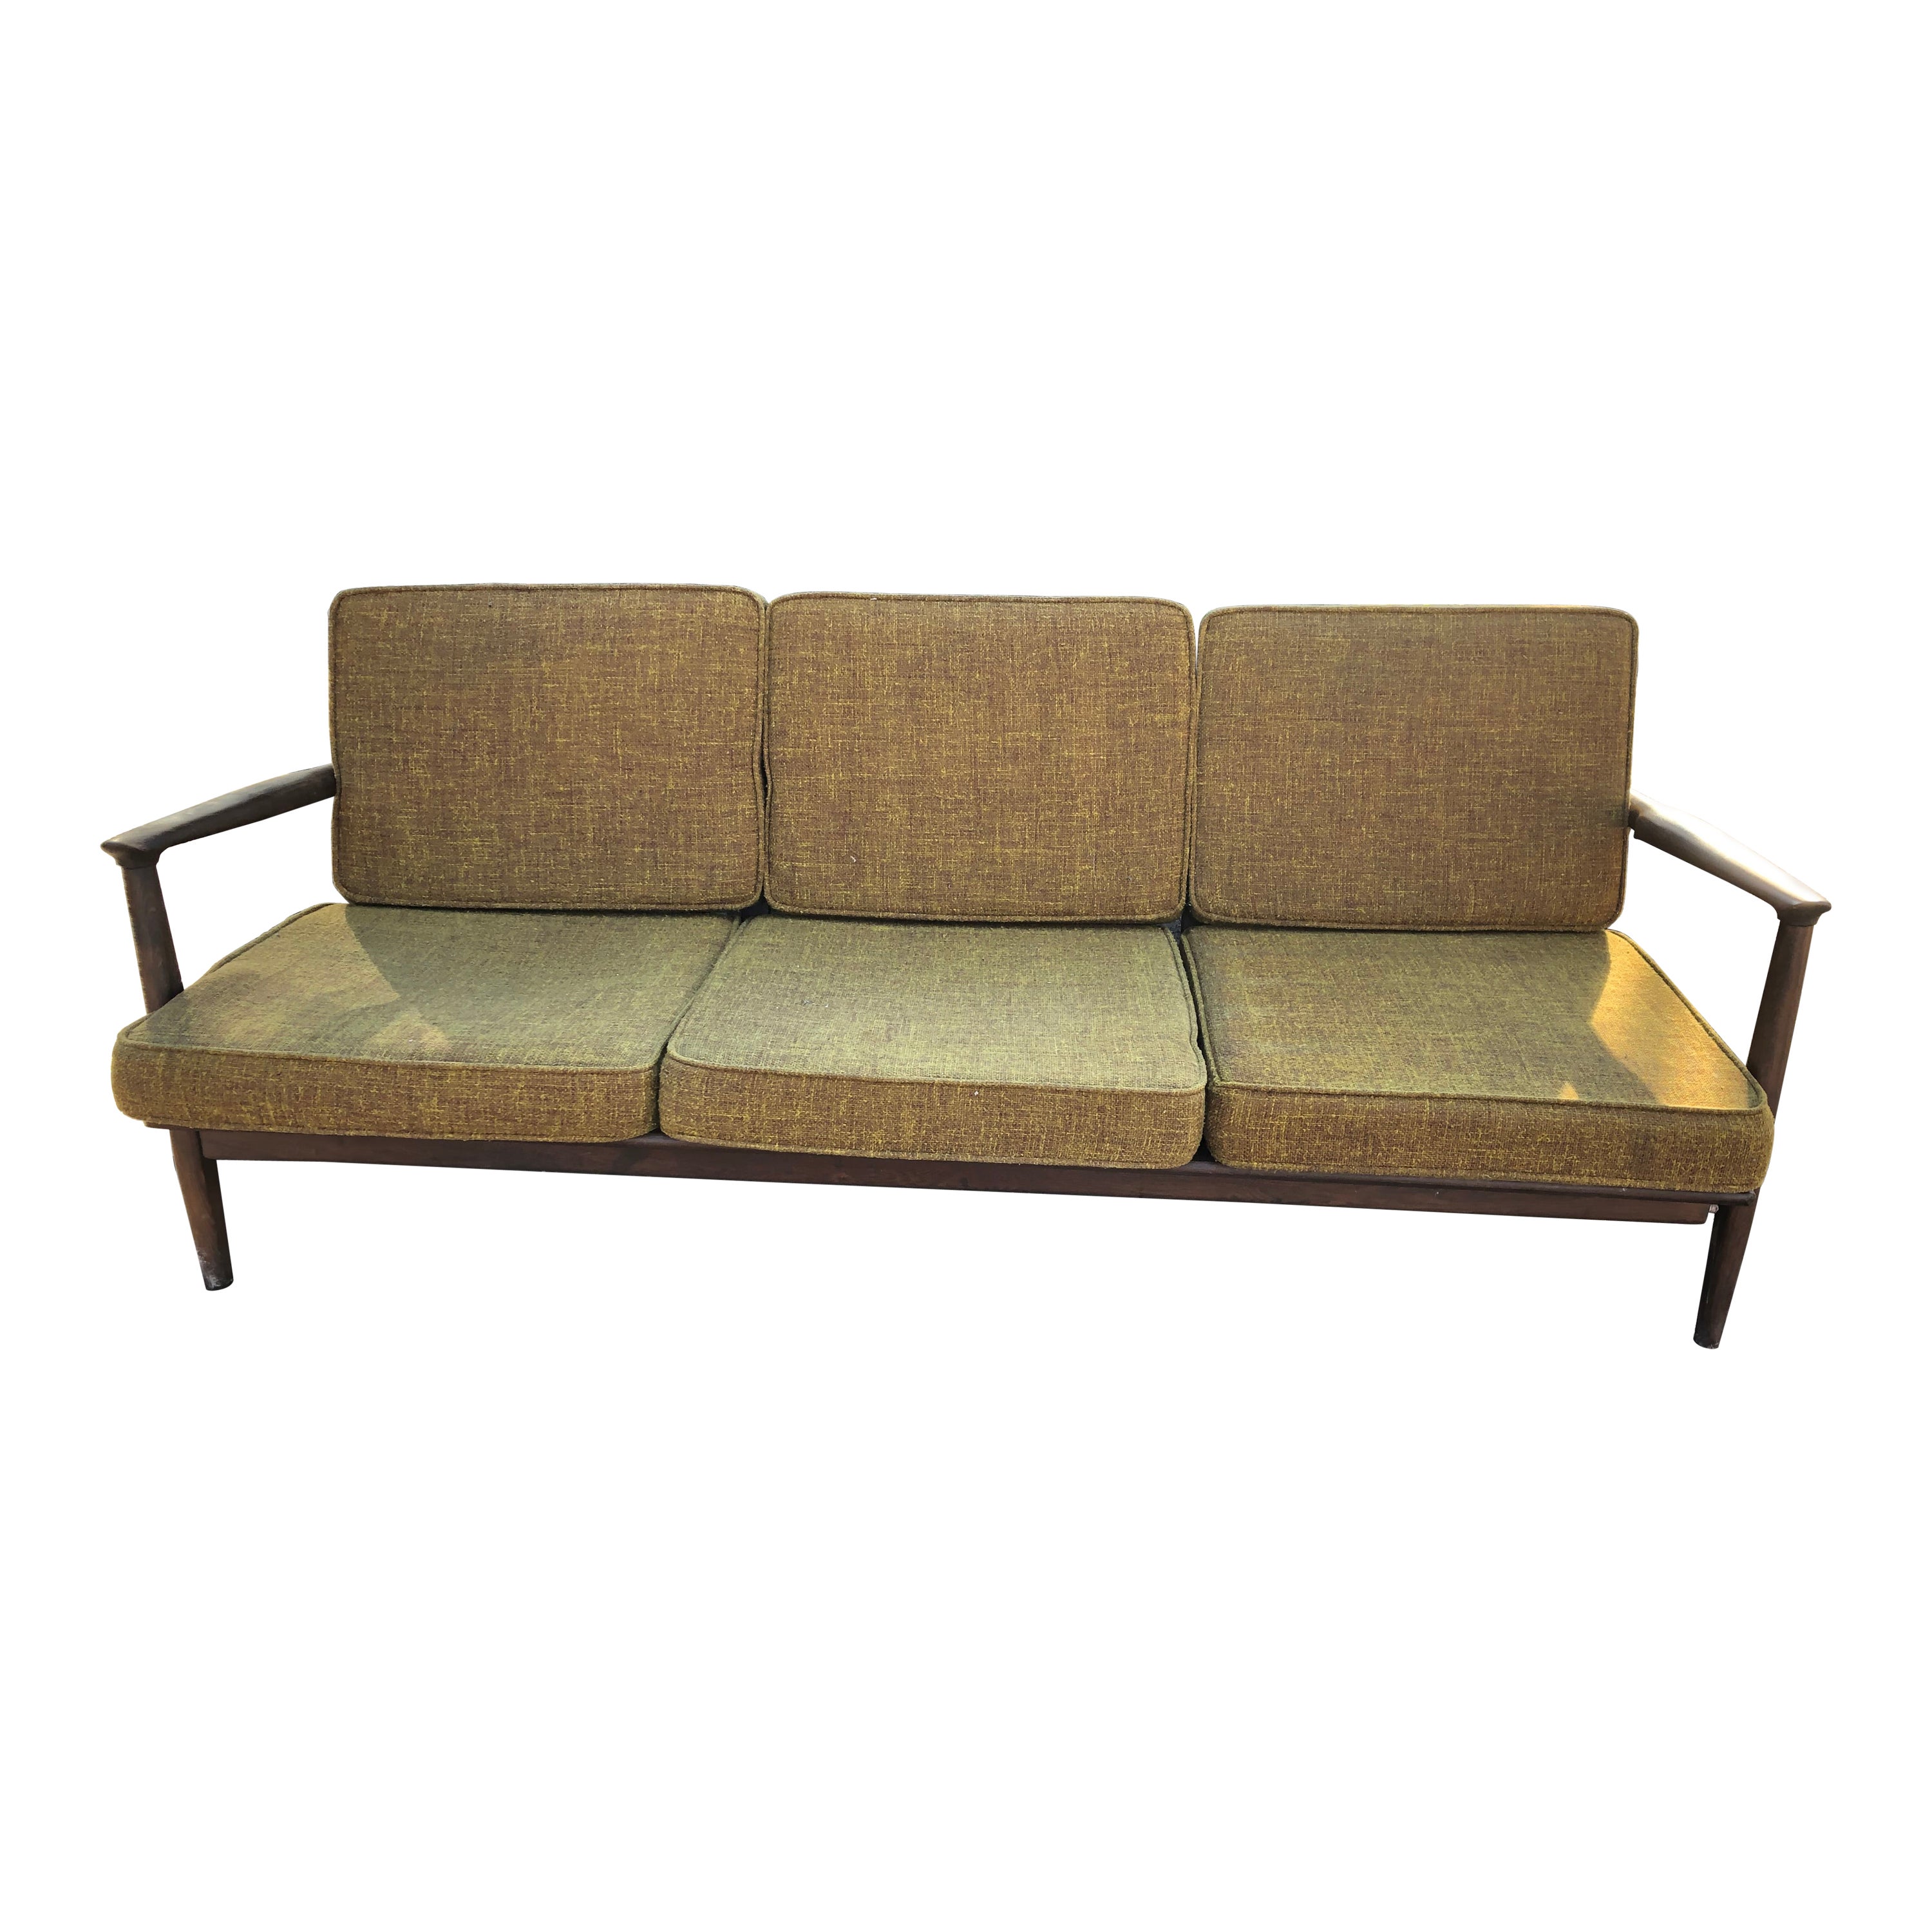 Retro Mid Century Modern Sleek Sofa For Sale